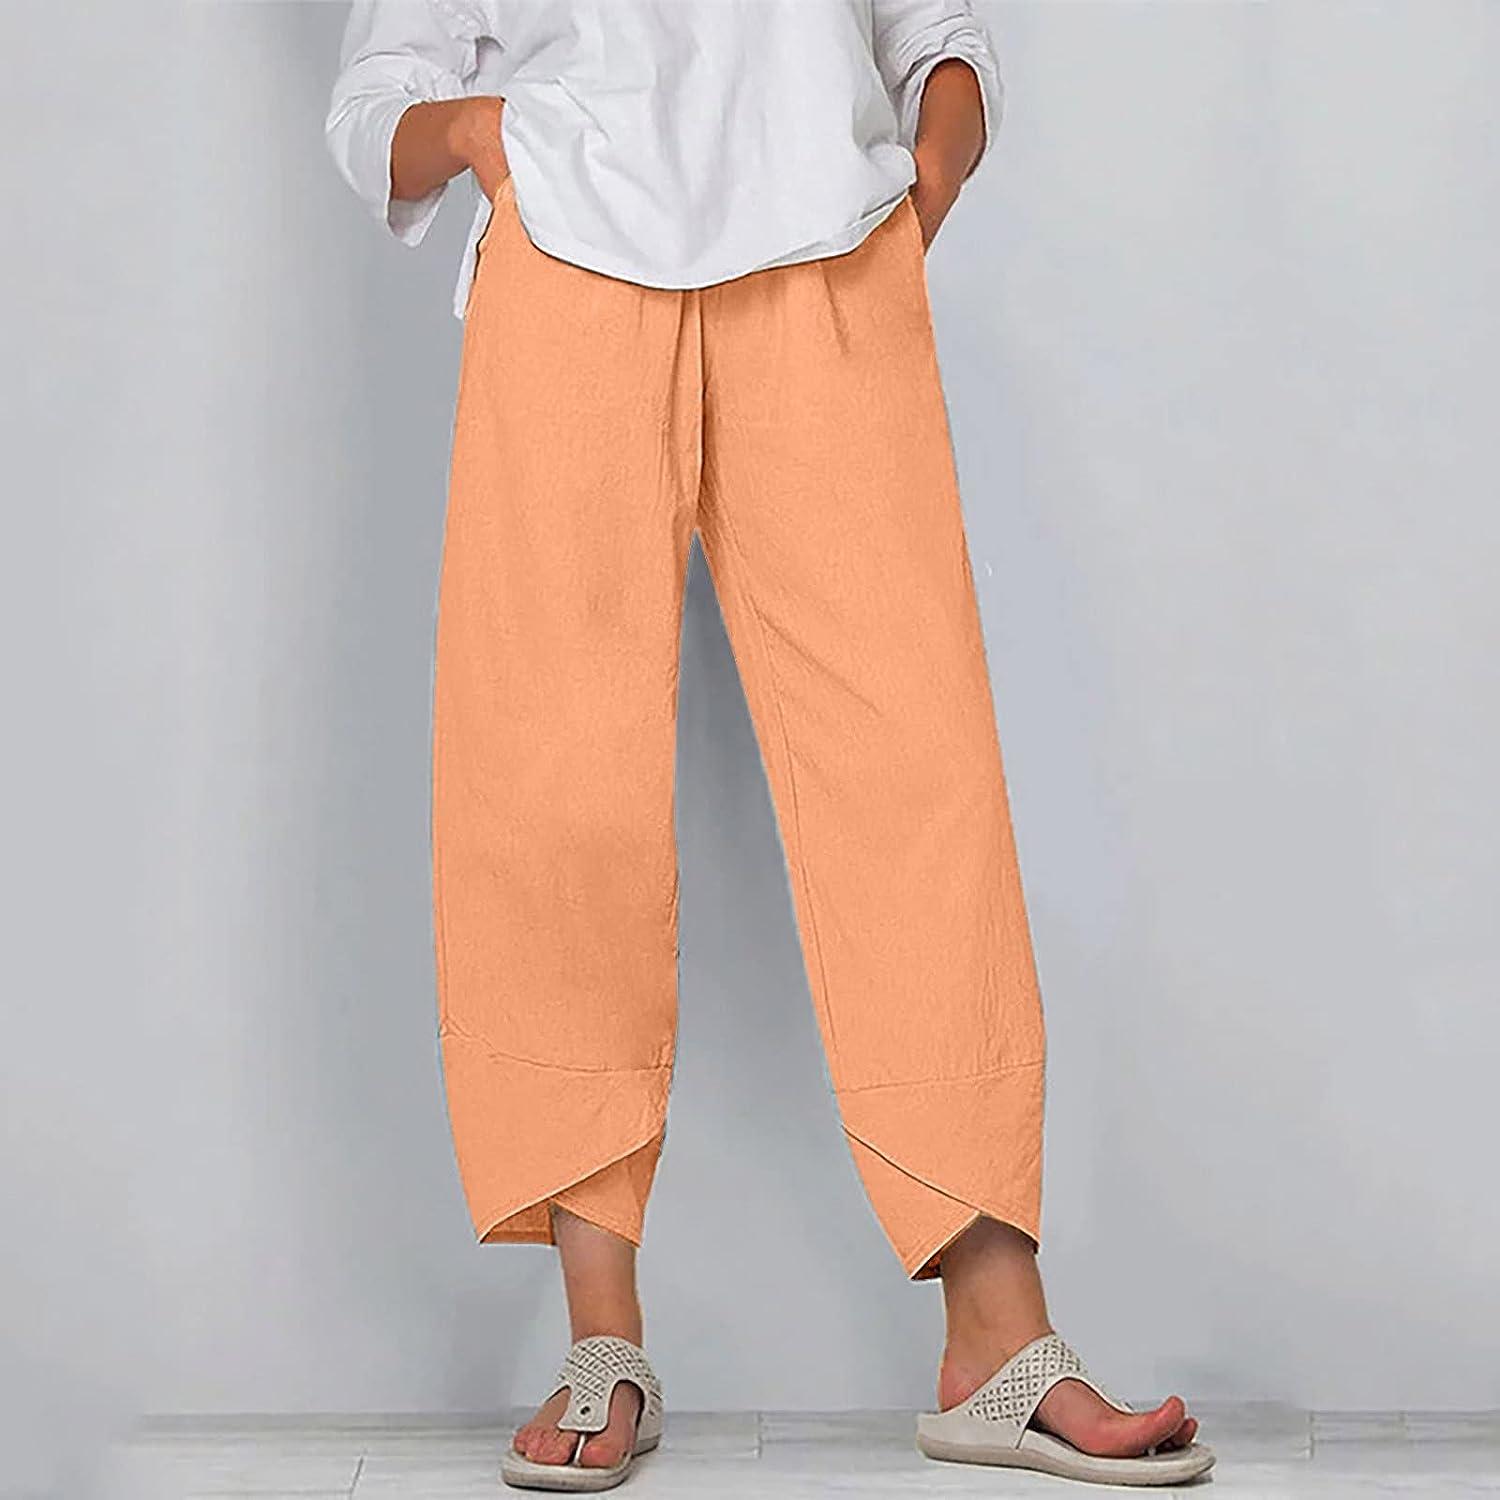 Xibodsi Linen Pants for Women, Womens Casual Pants Elastic Waist Cotton  Linen Tapered Capri Pants Wide Leg Cropped Trousers 00-orange Large